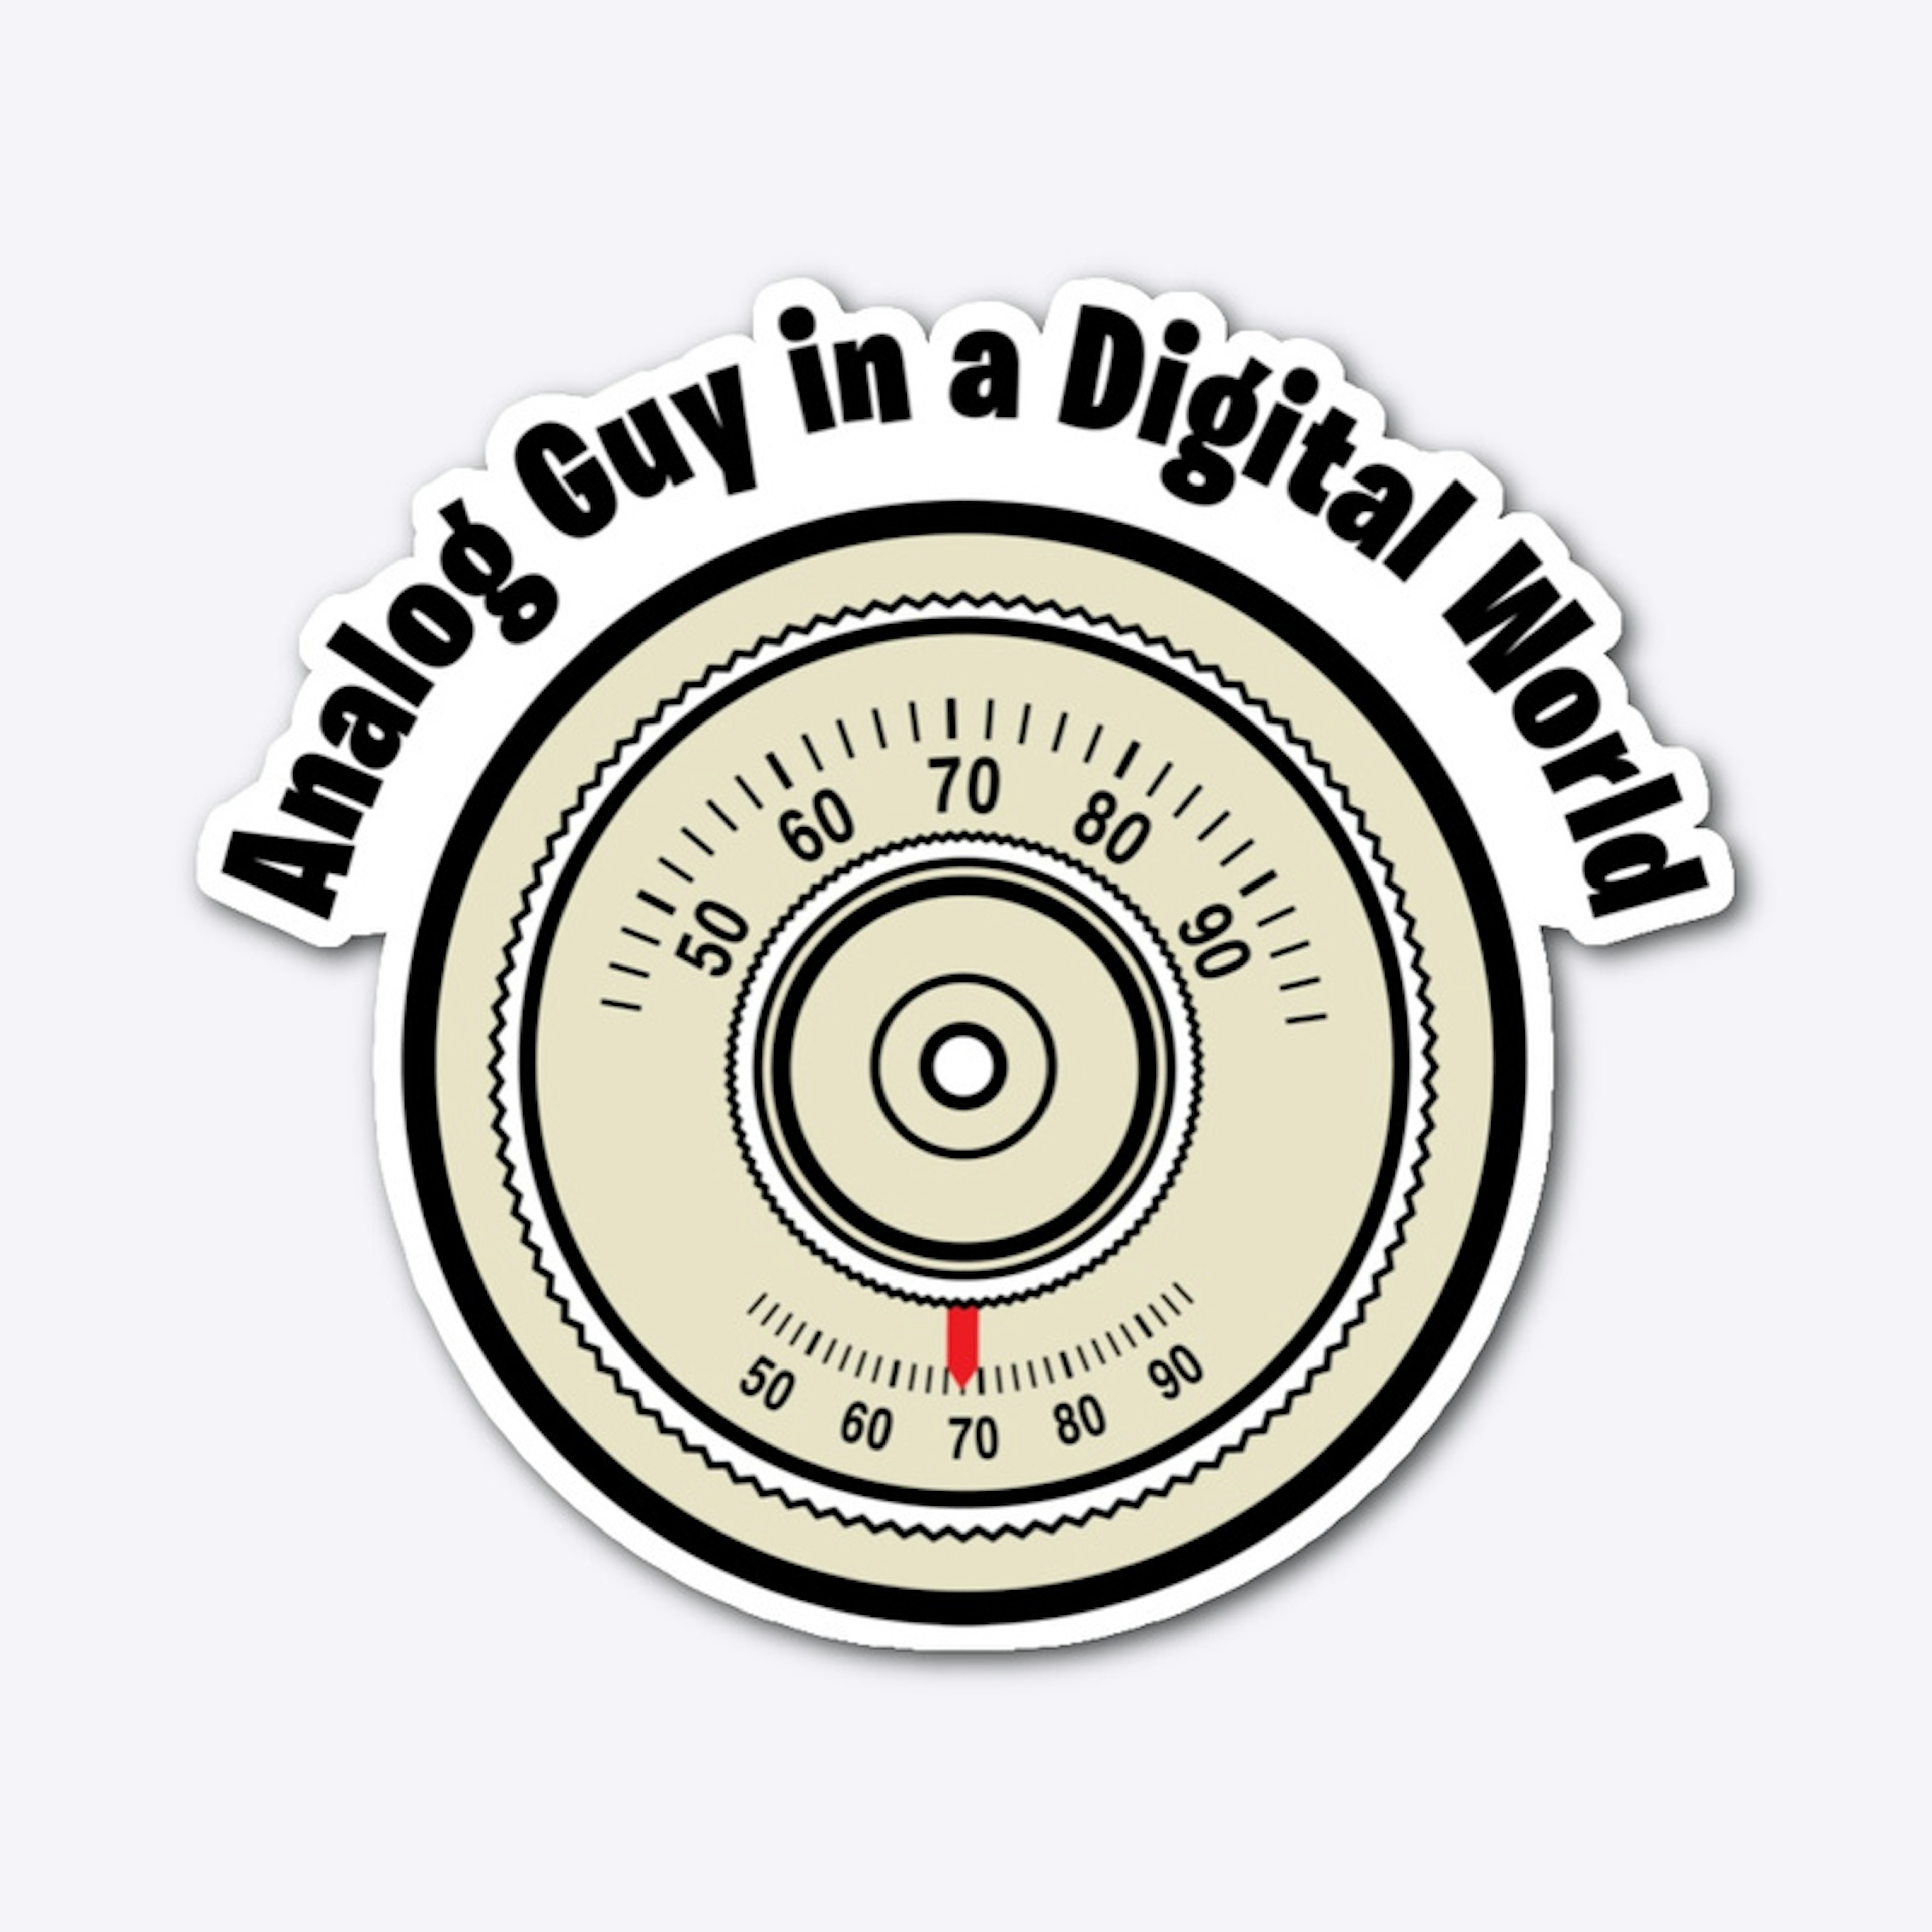 Analog Guy in a Digital World